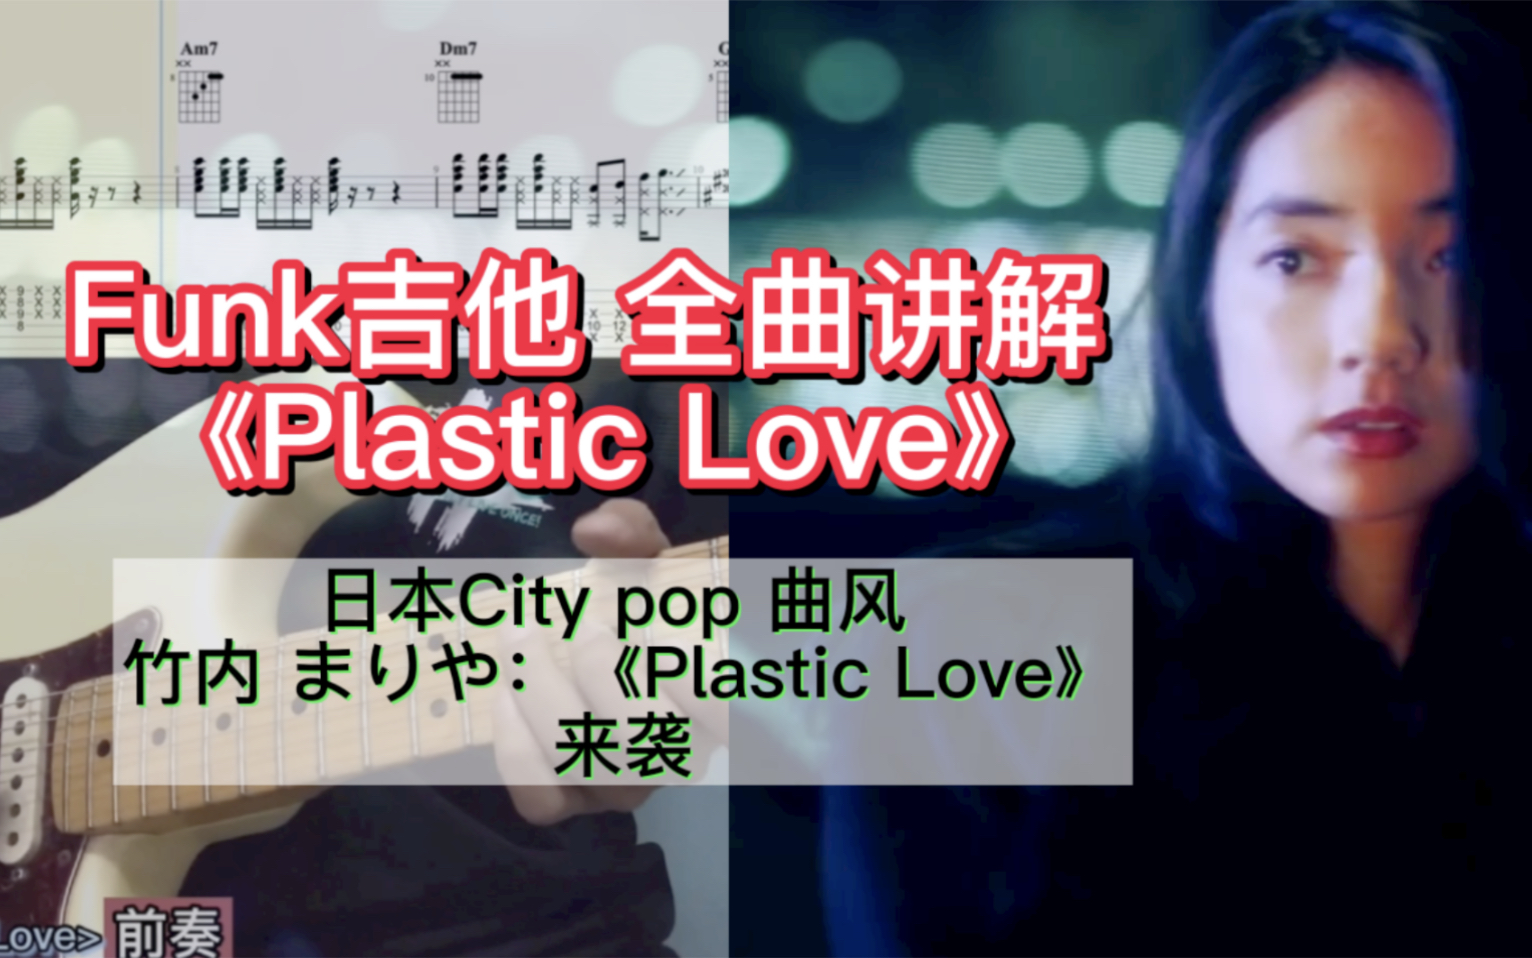 Funk吉他教程《plastic love》日本citypop完整讲解 油管千万播放量火热单曲